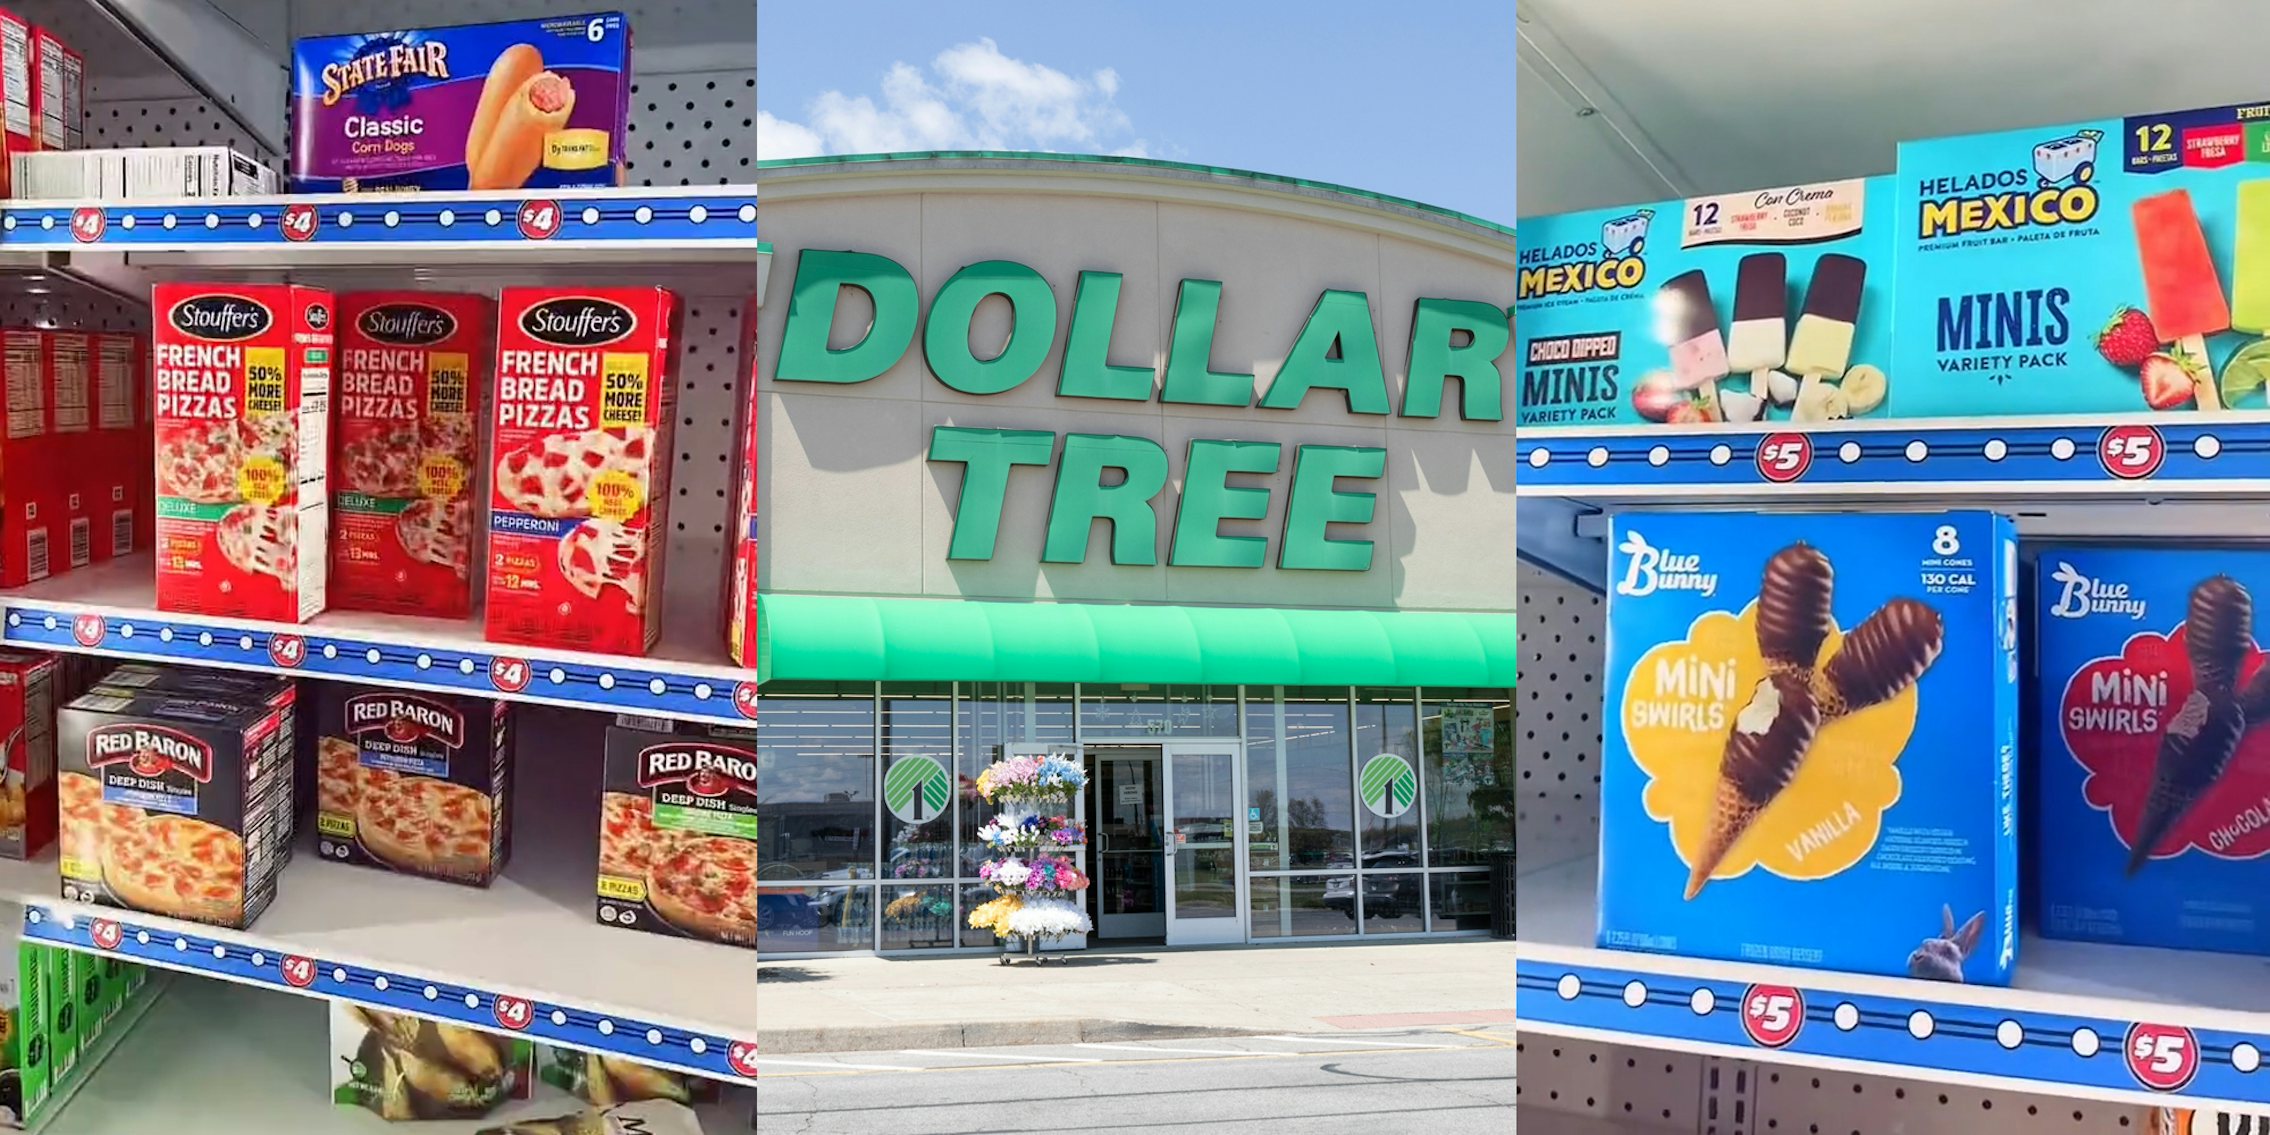 Dollar Tree $4 items in freezer (l) Dollar Tree sign above building entrance (c) Dollar Tree $5 items in freezer (r)